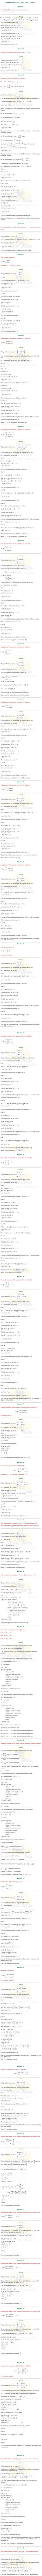 ncert solutions for class 12 Math Chapter 5 ex.5.1